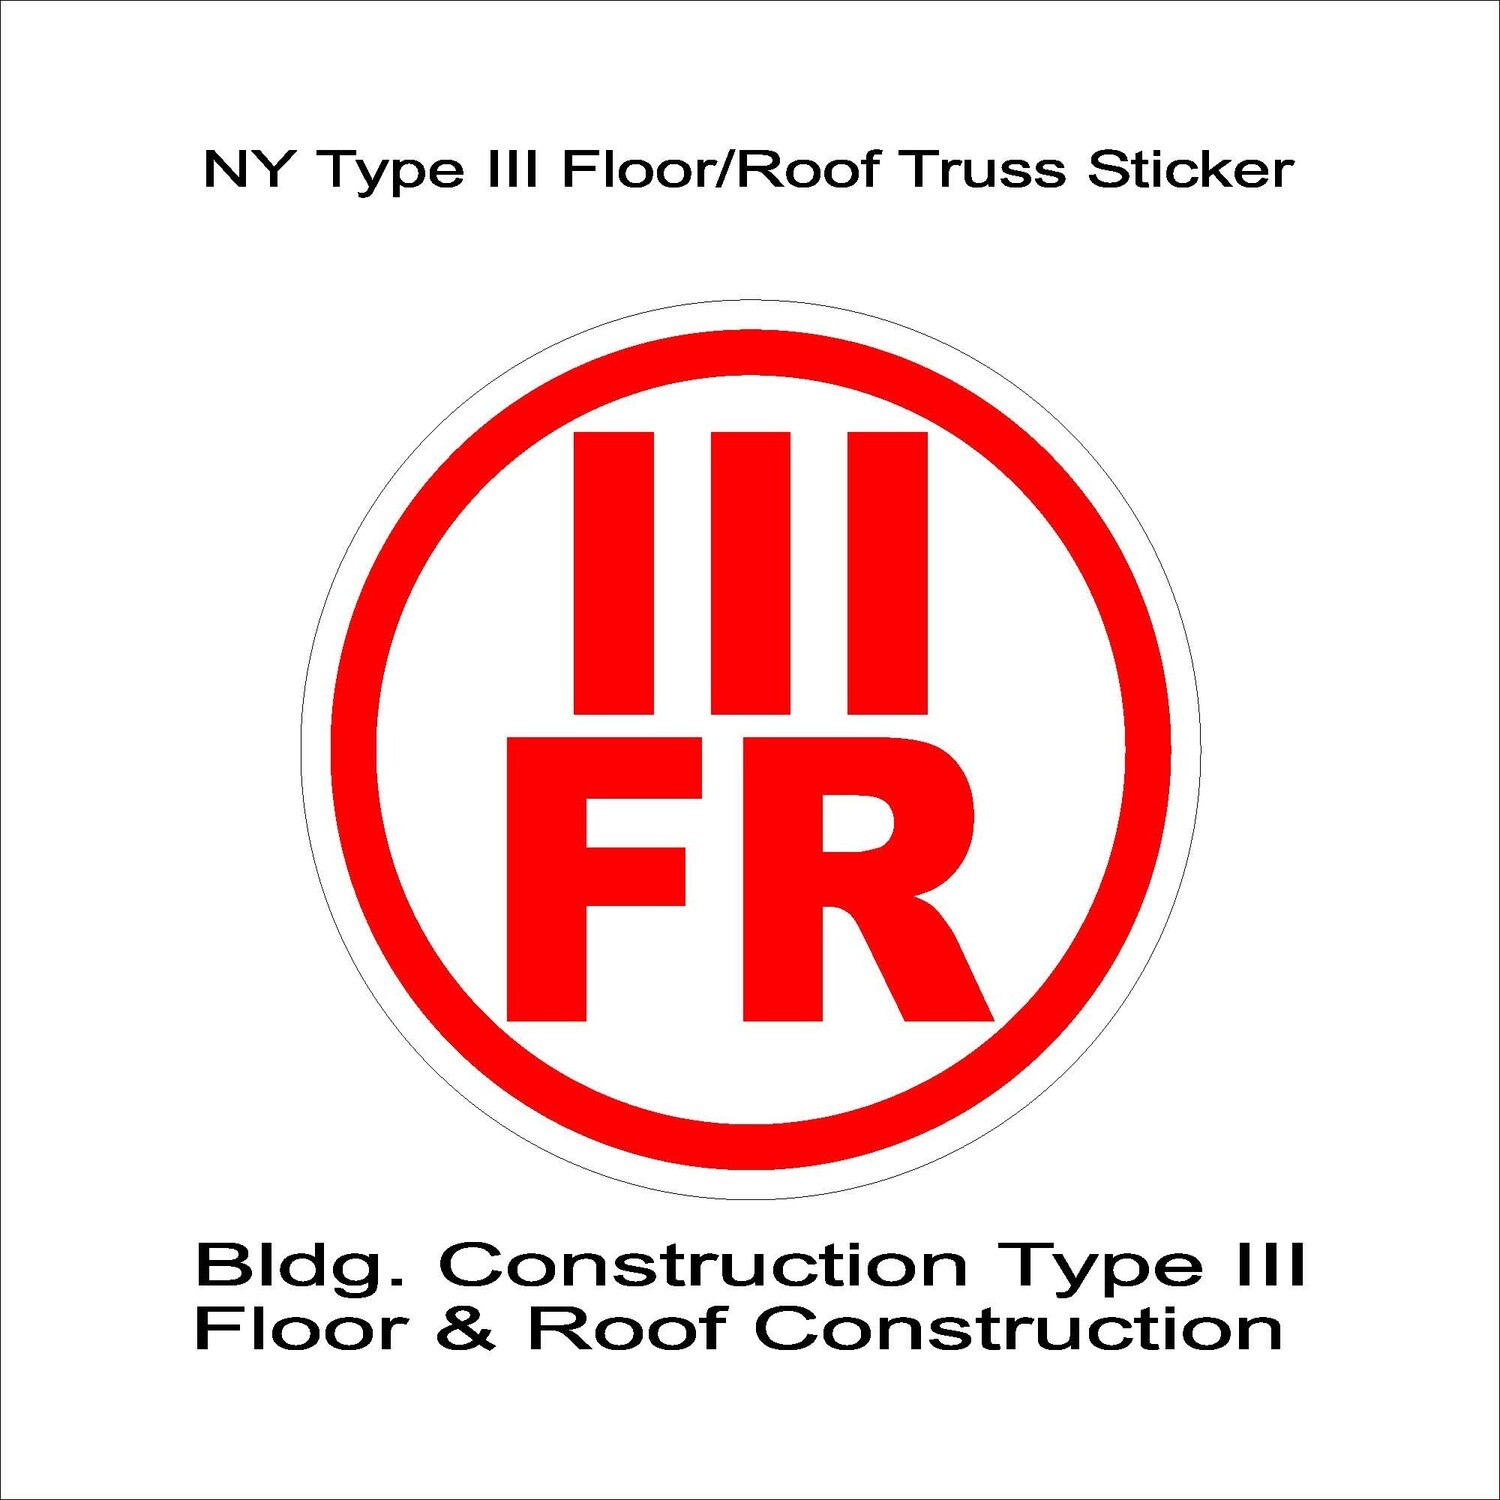 NY Type III Floor/Roof Truss Sticker